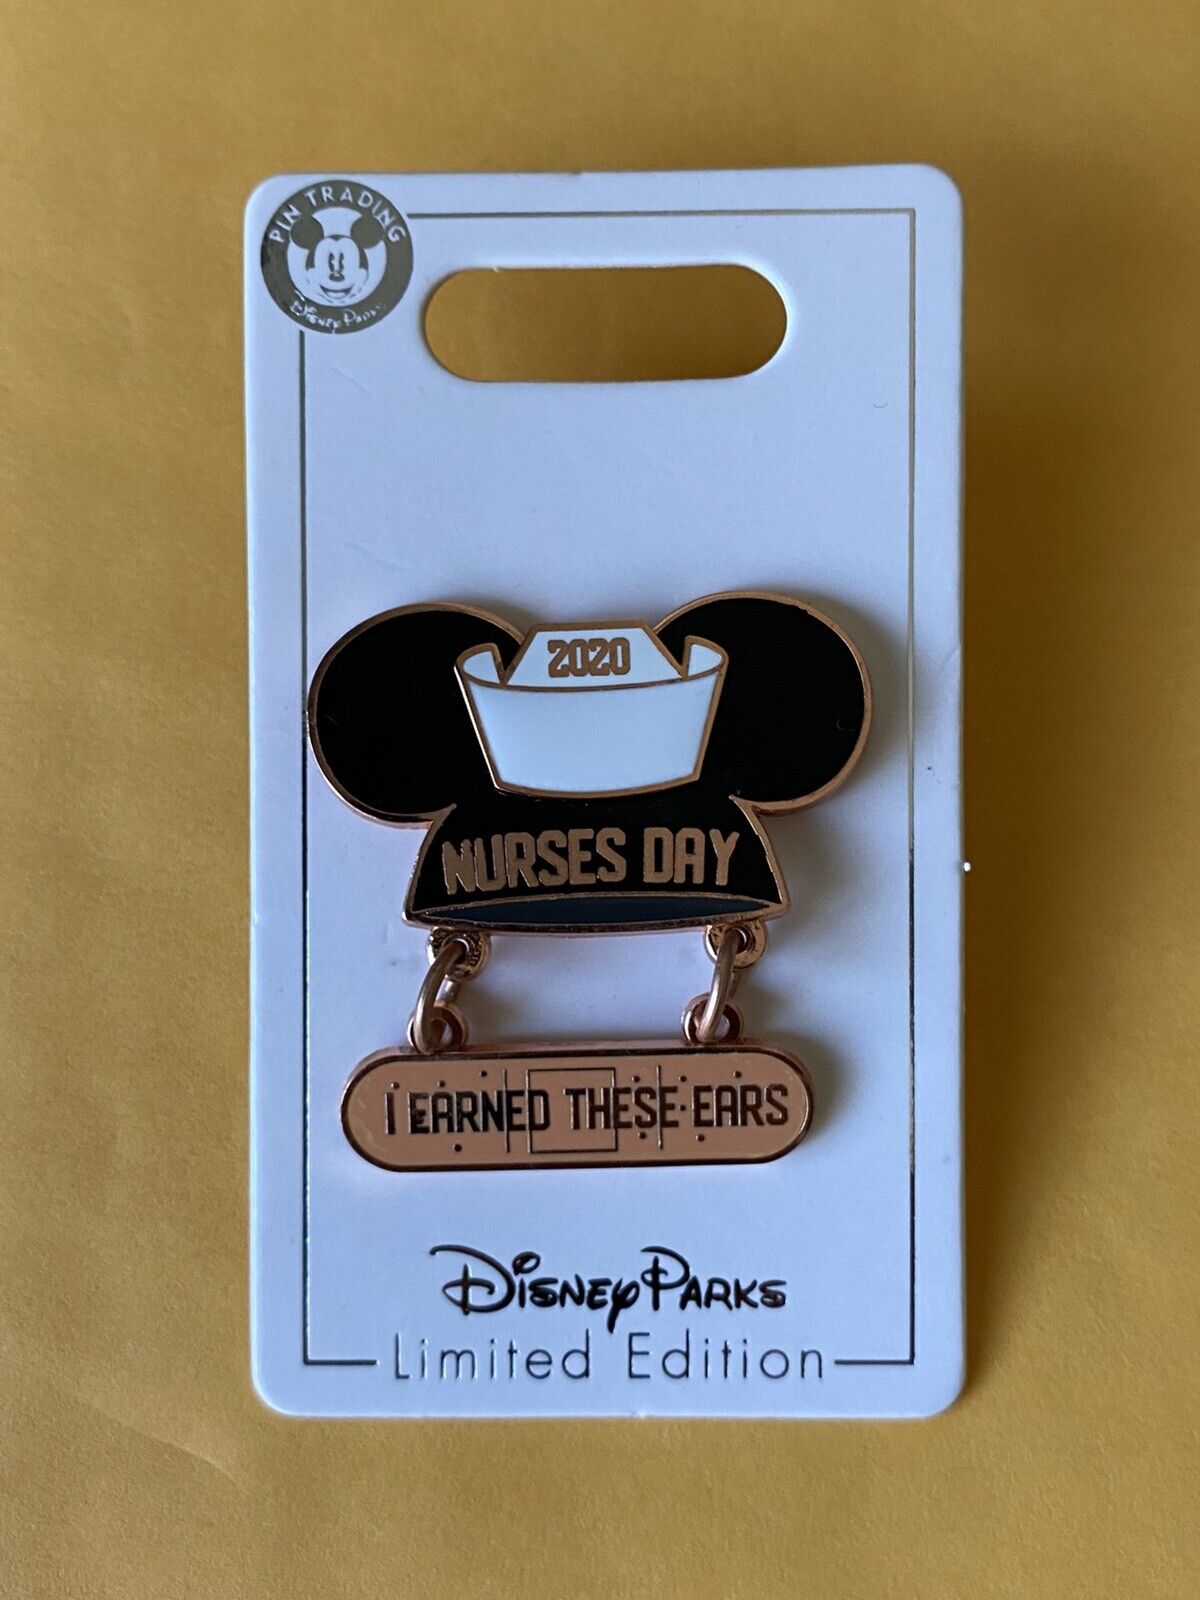 Disney 2020 Nurses Day I Earned These Ears Pin for Sale Egypt Art Site